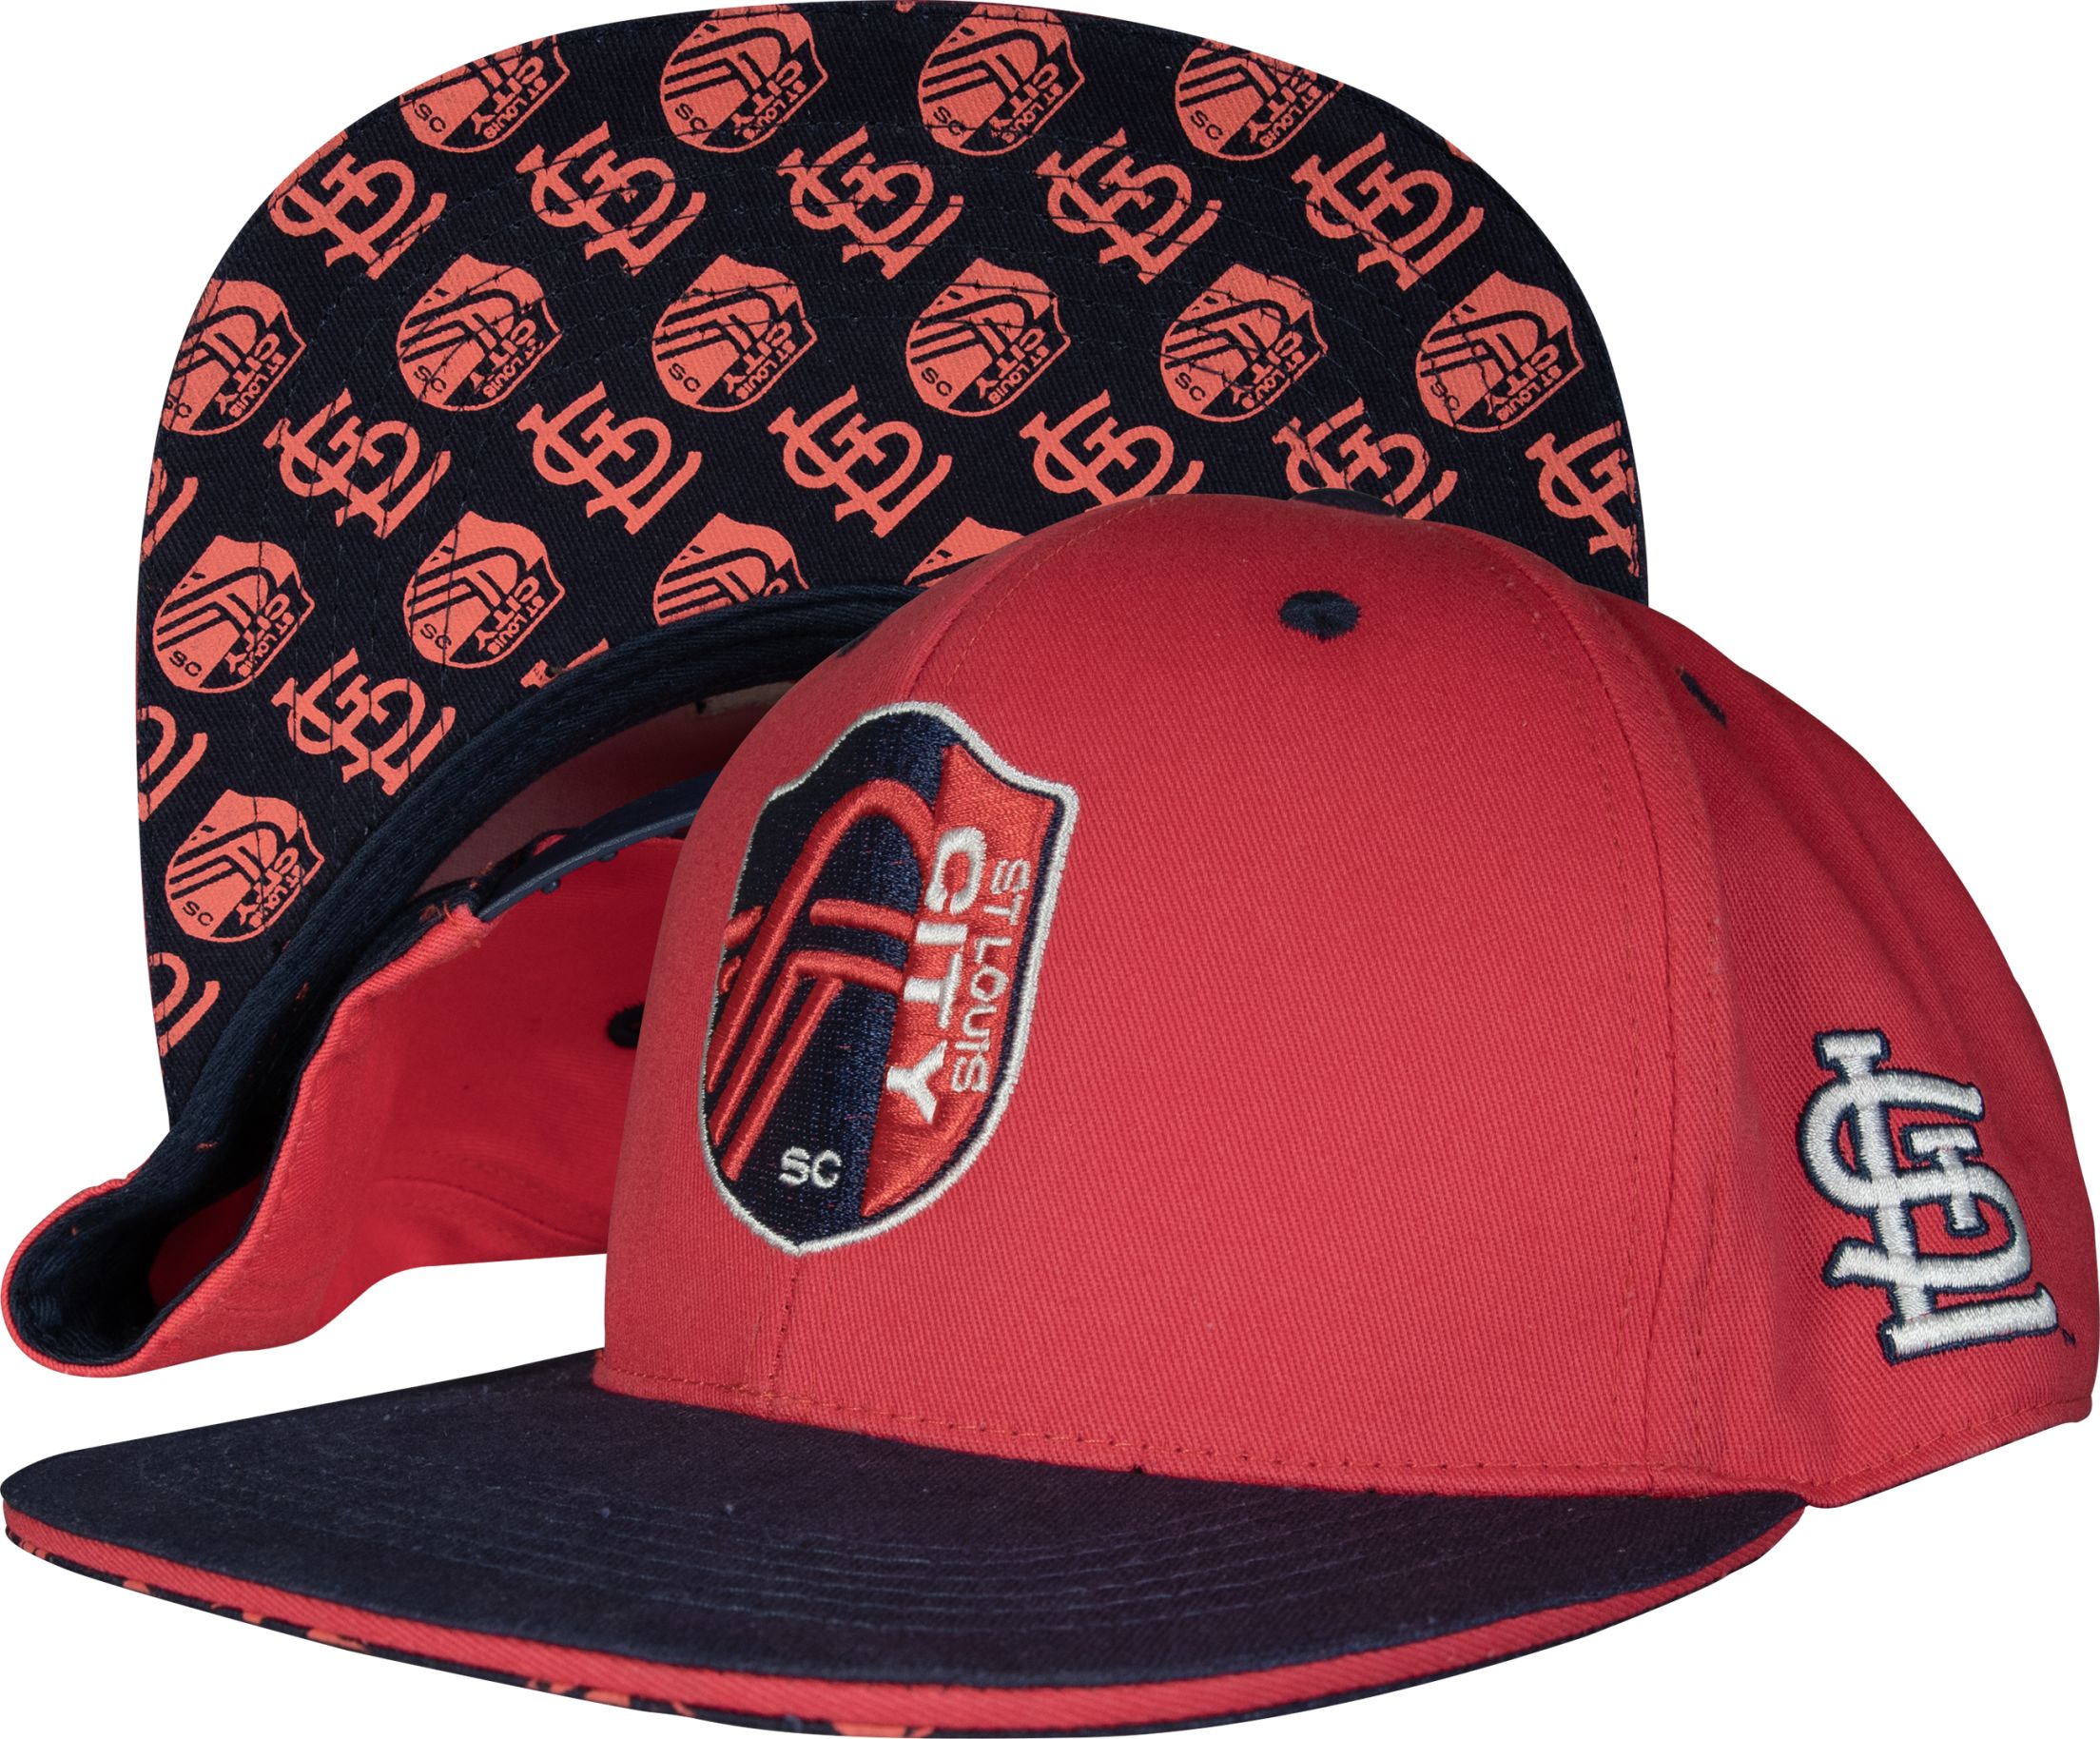 Kids St. Louis Cardinals Hats, Kids Cardinals Baseball Hats and Caps